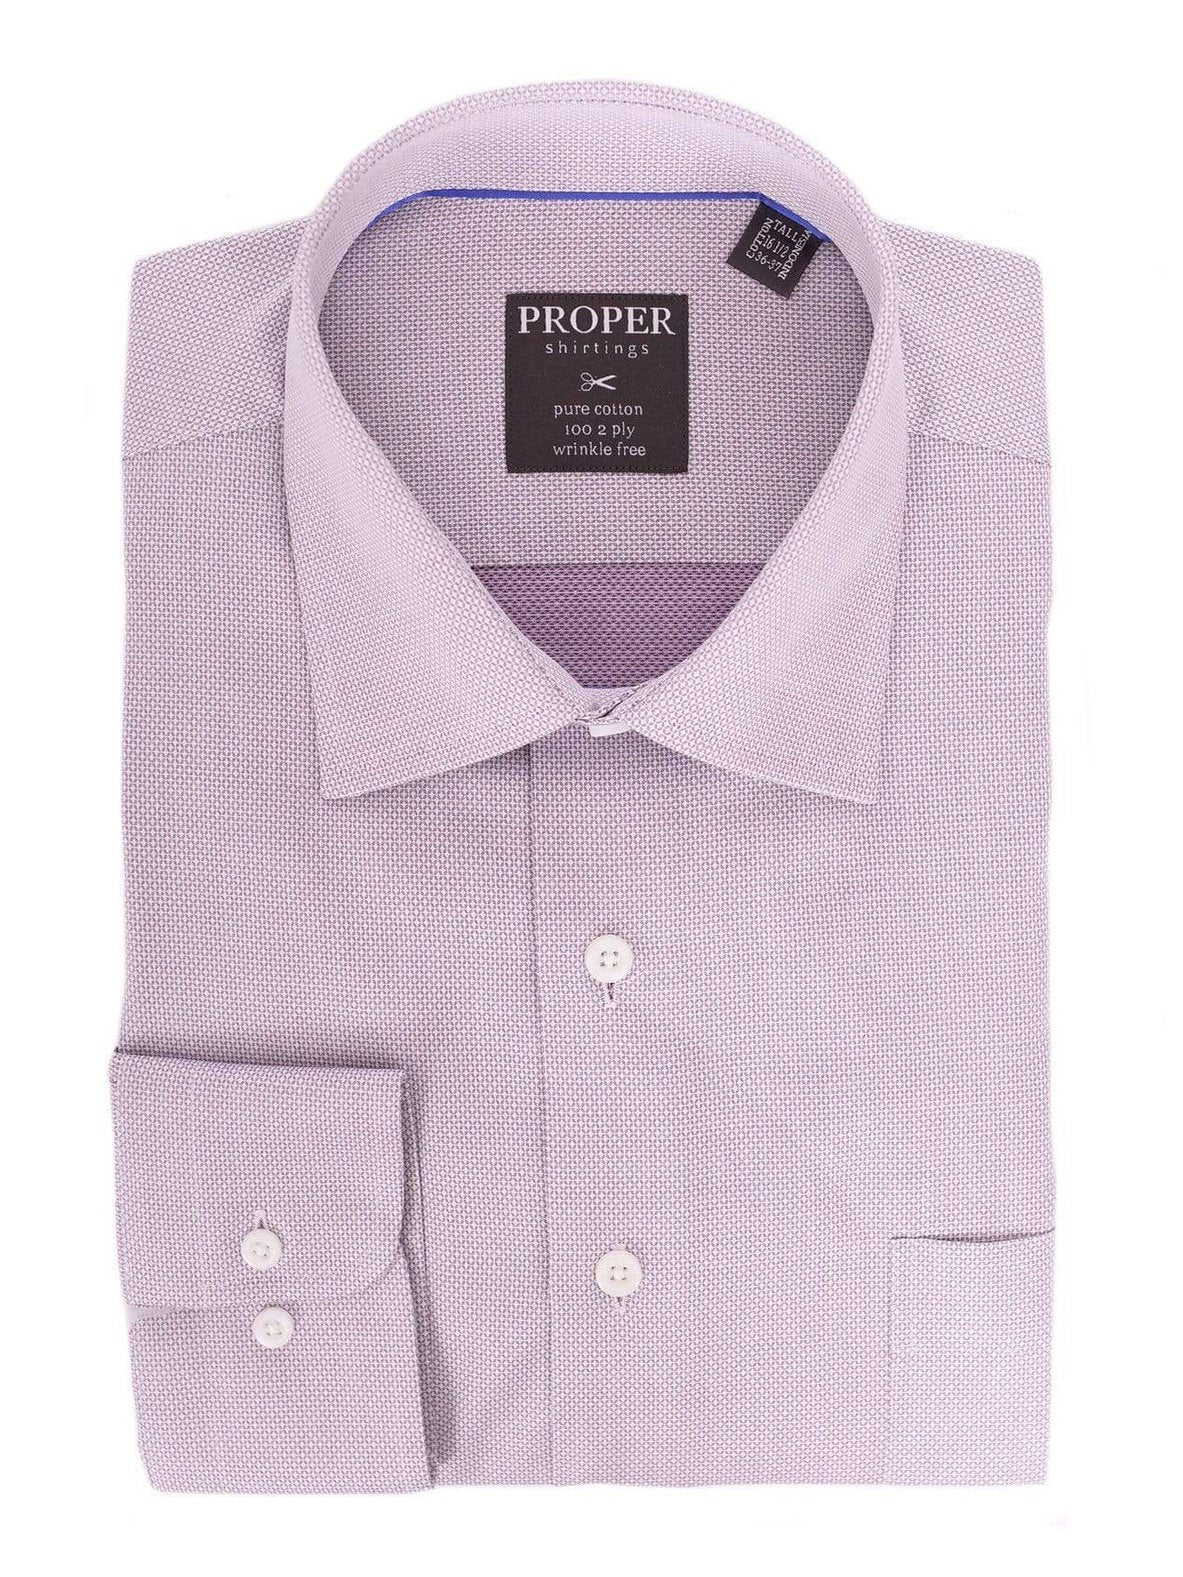 Proper Shirtings SHIRTS 17 32/33 Light Purple Textured Spread Collar Wrinkle Free 100 2ply Cotton Dress Shirt